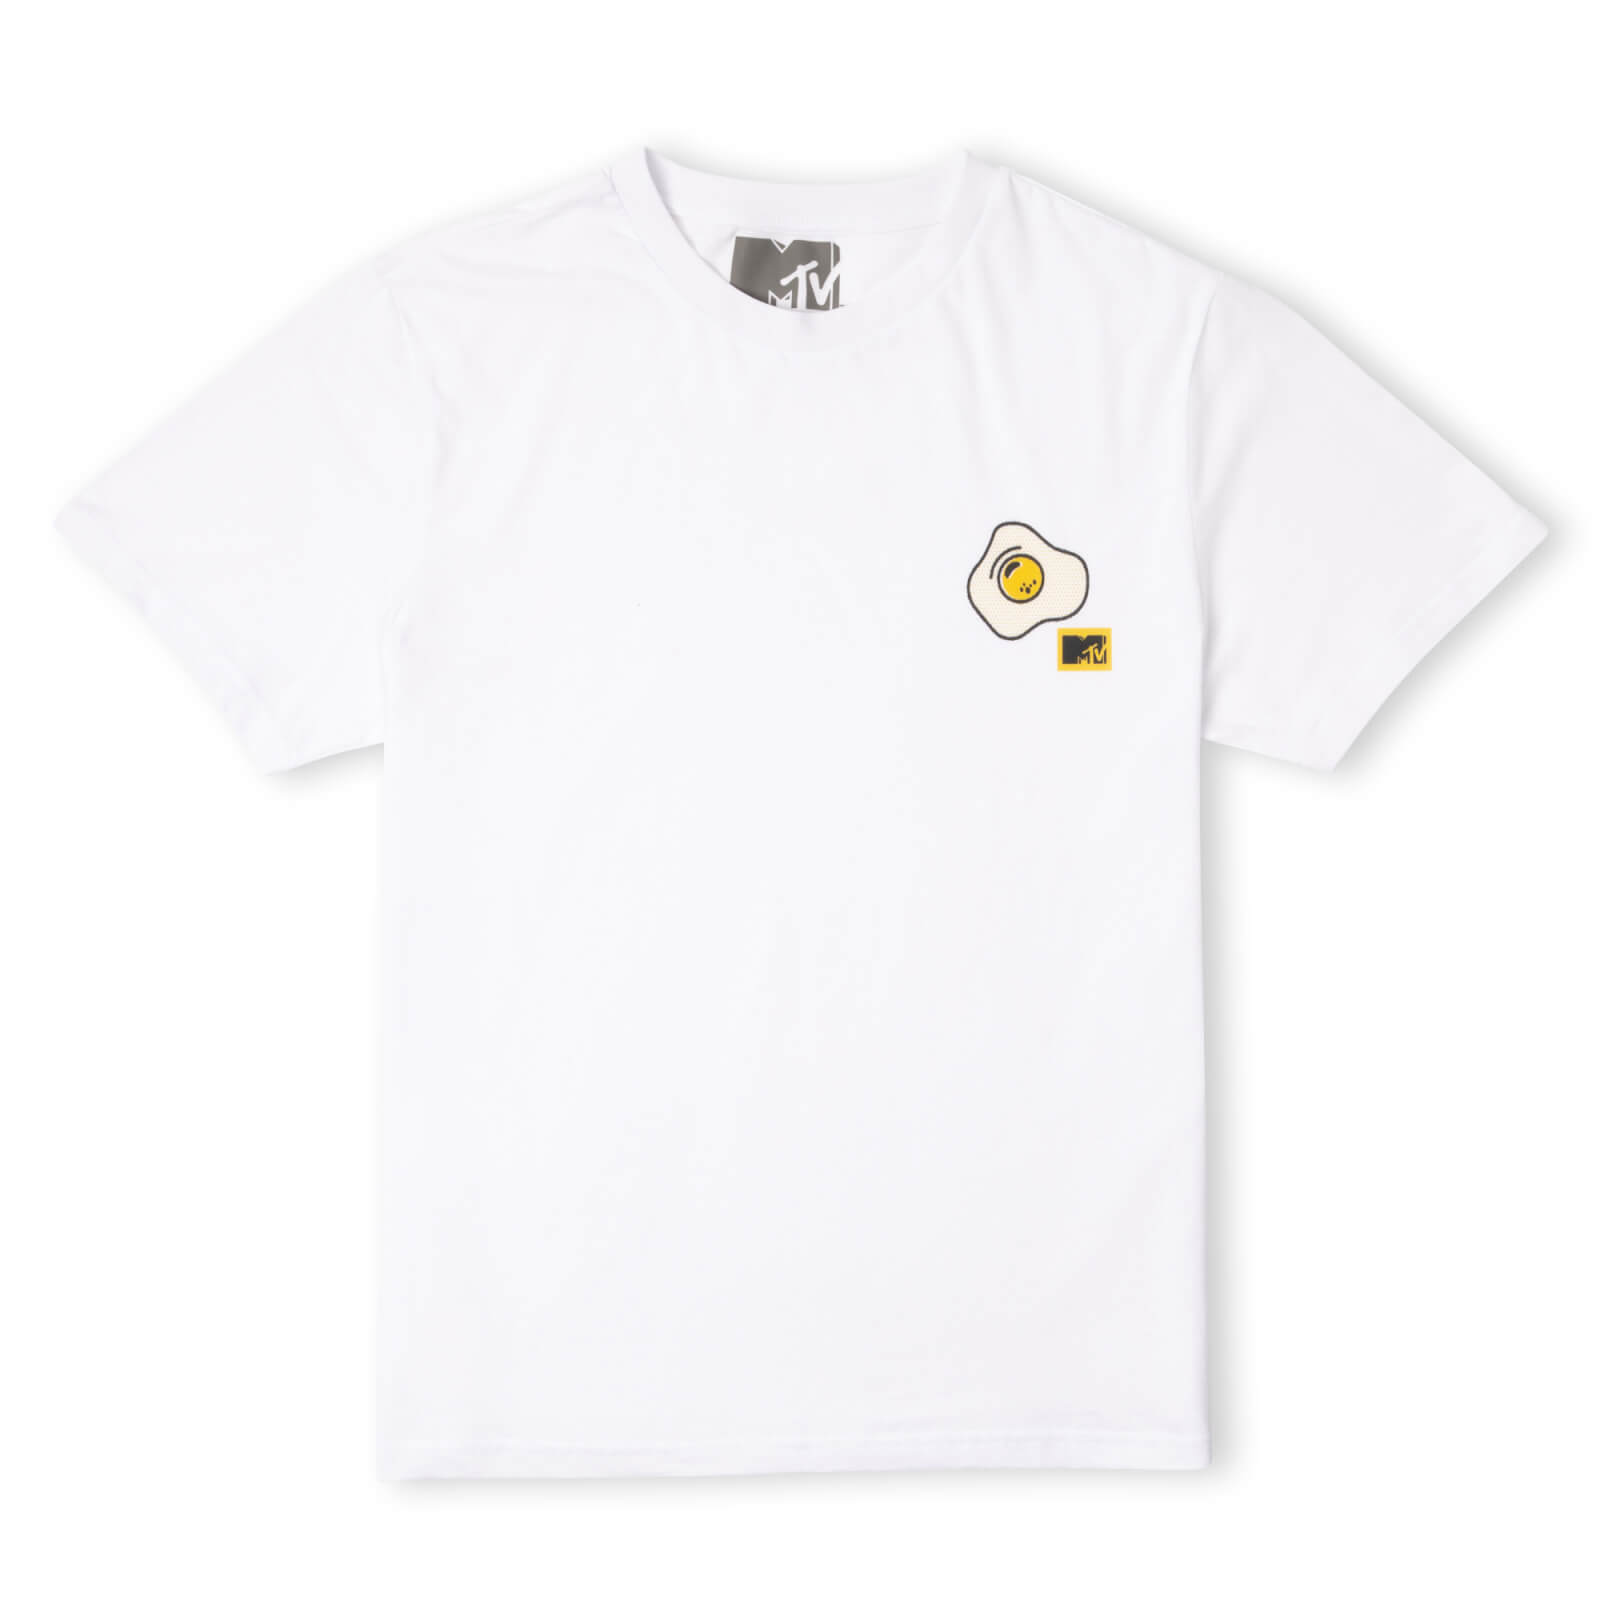 MTV Fried Egg Women's T-Shirt - White - XS - White